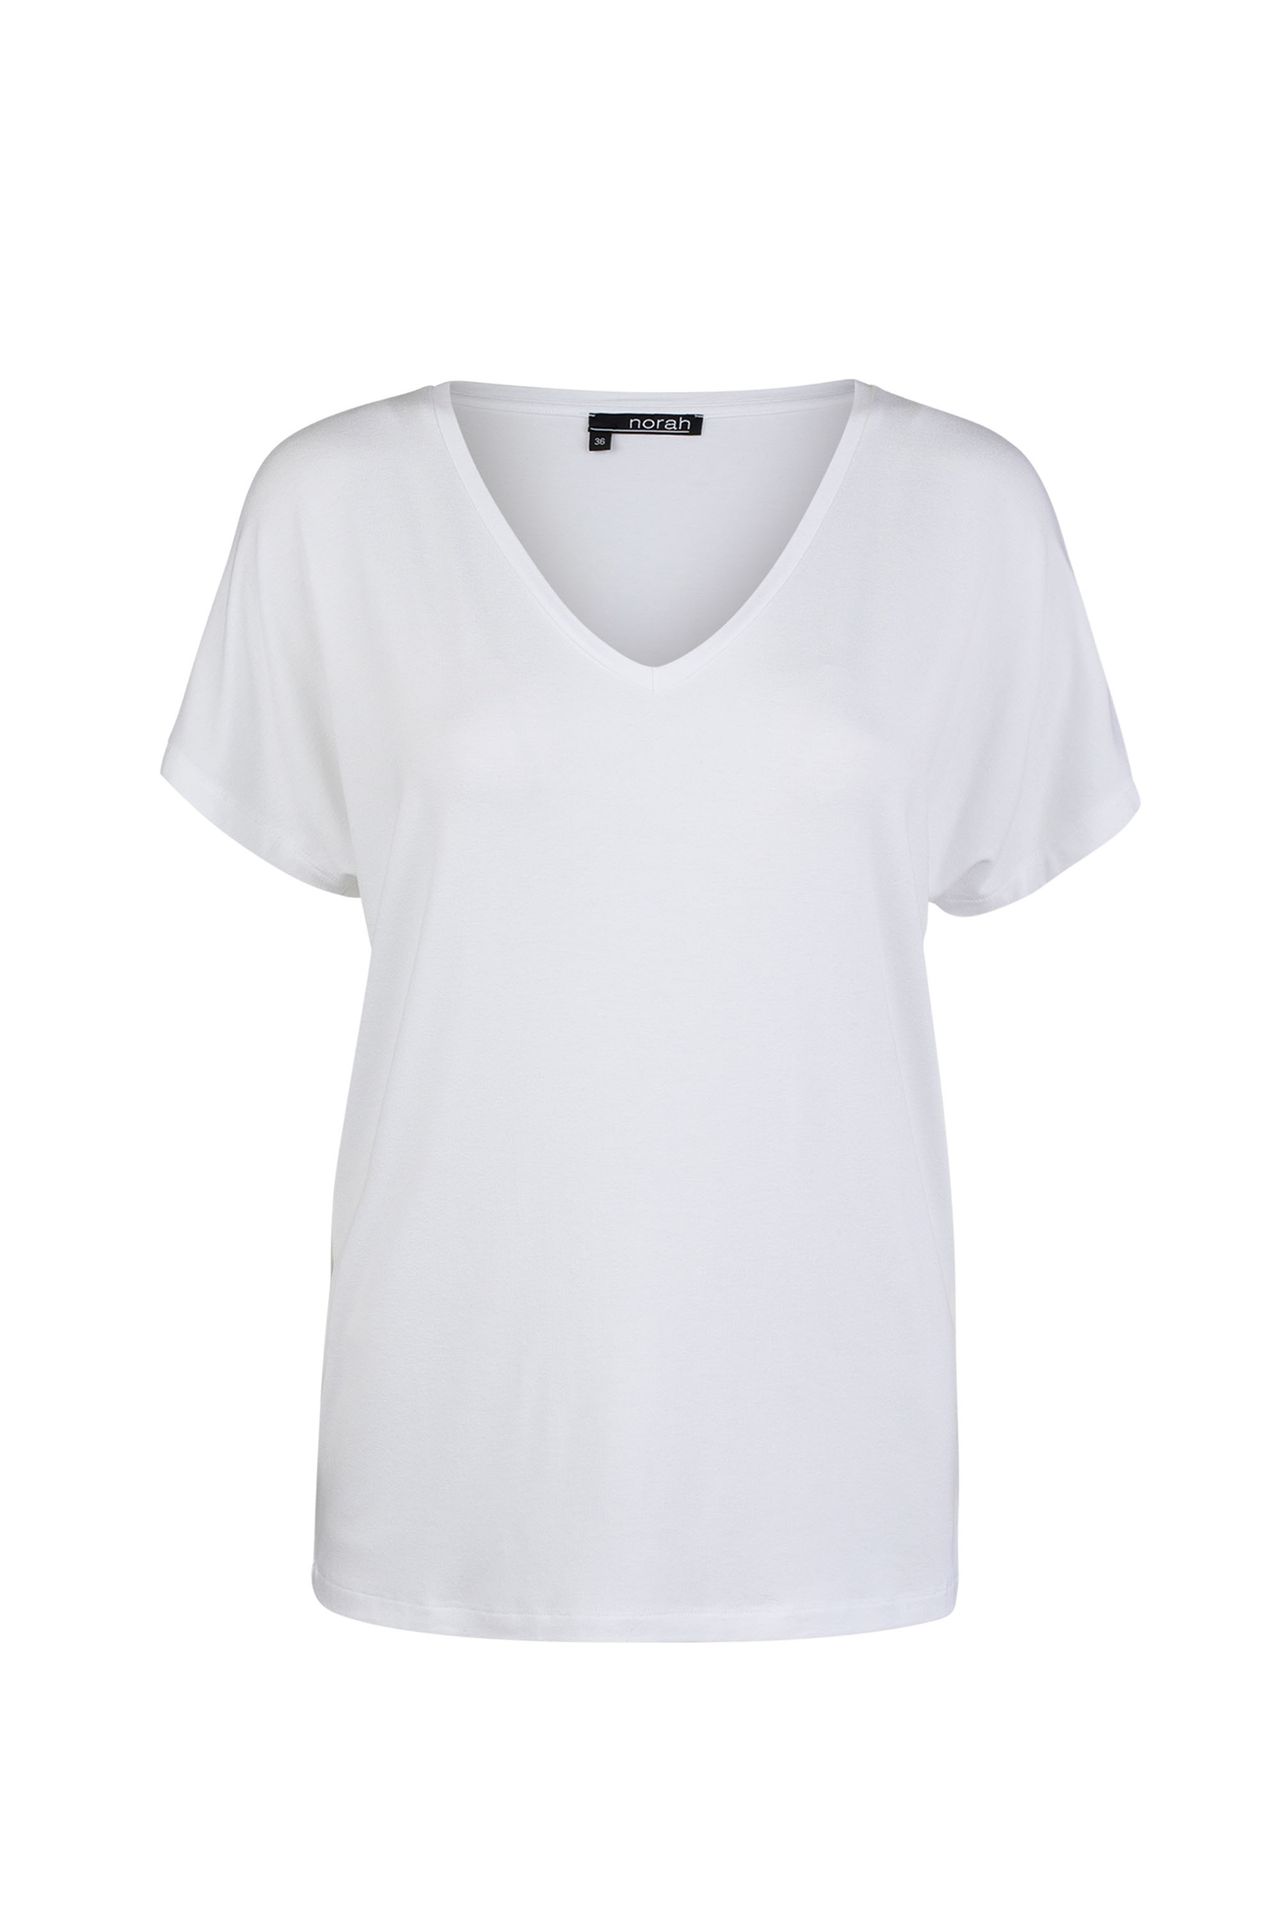 Norah Shirt Maral wit white 208968-100